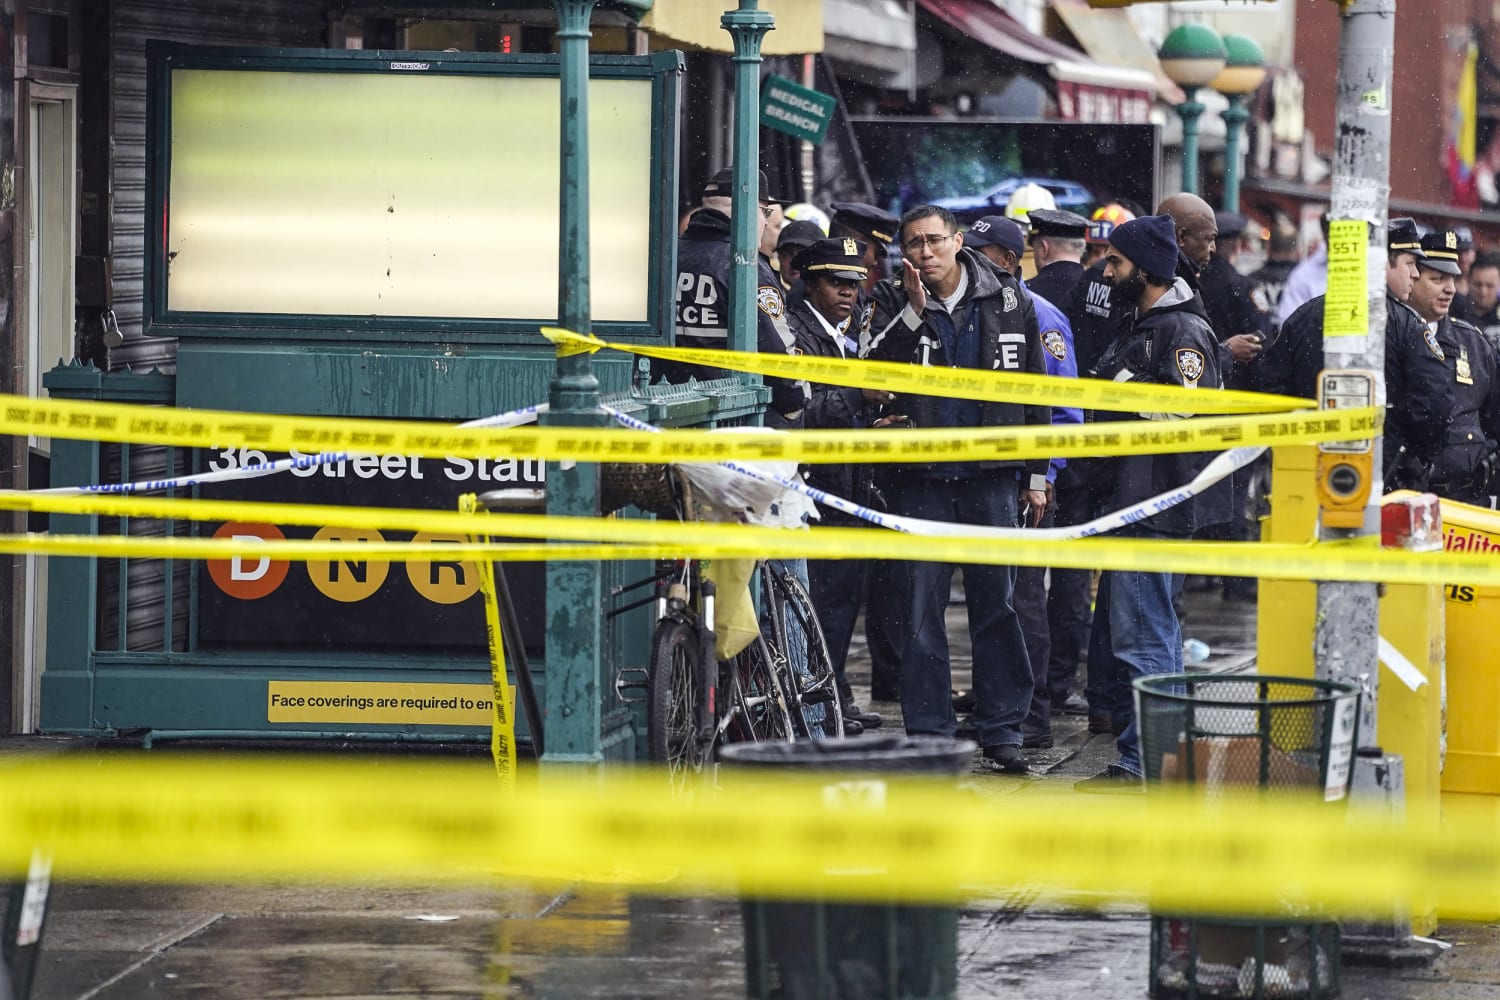 Five to split $50,000 reward in New York subway shooting case